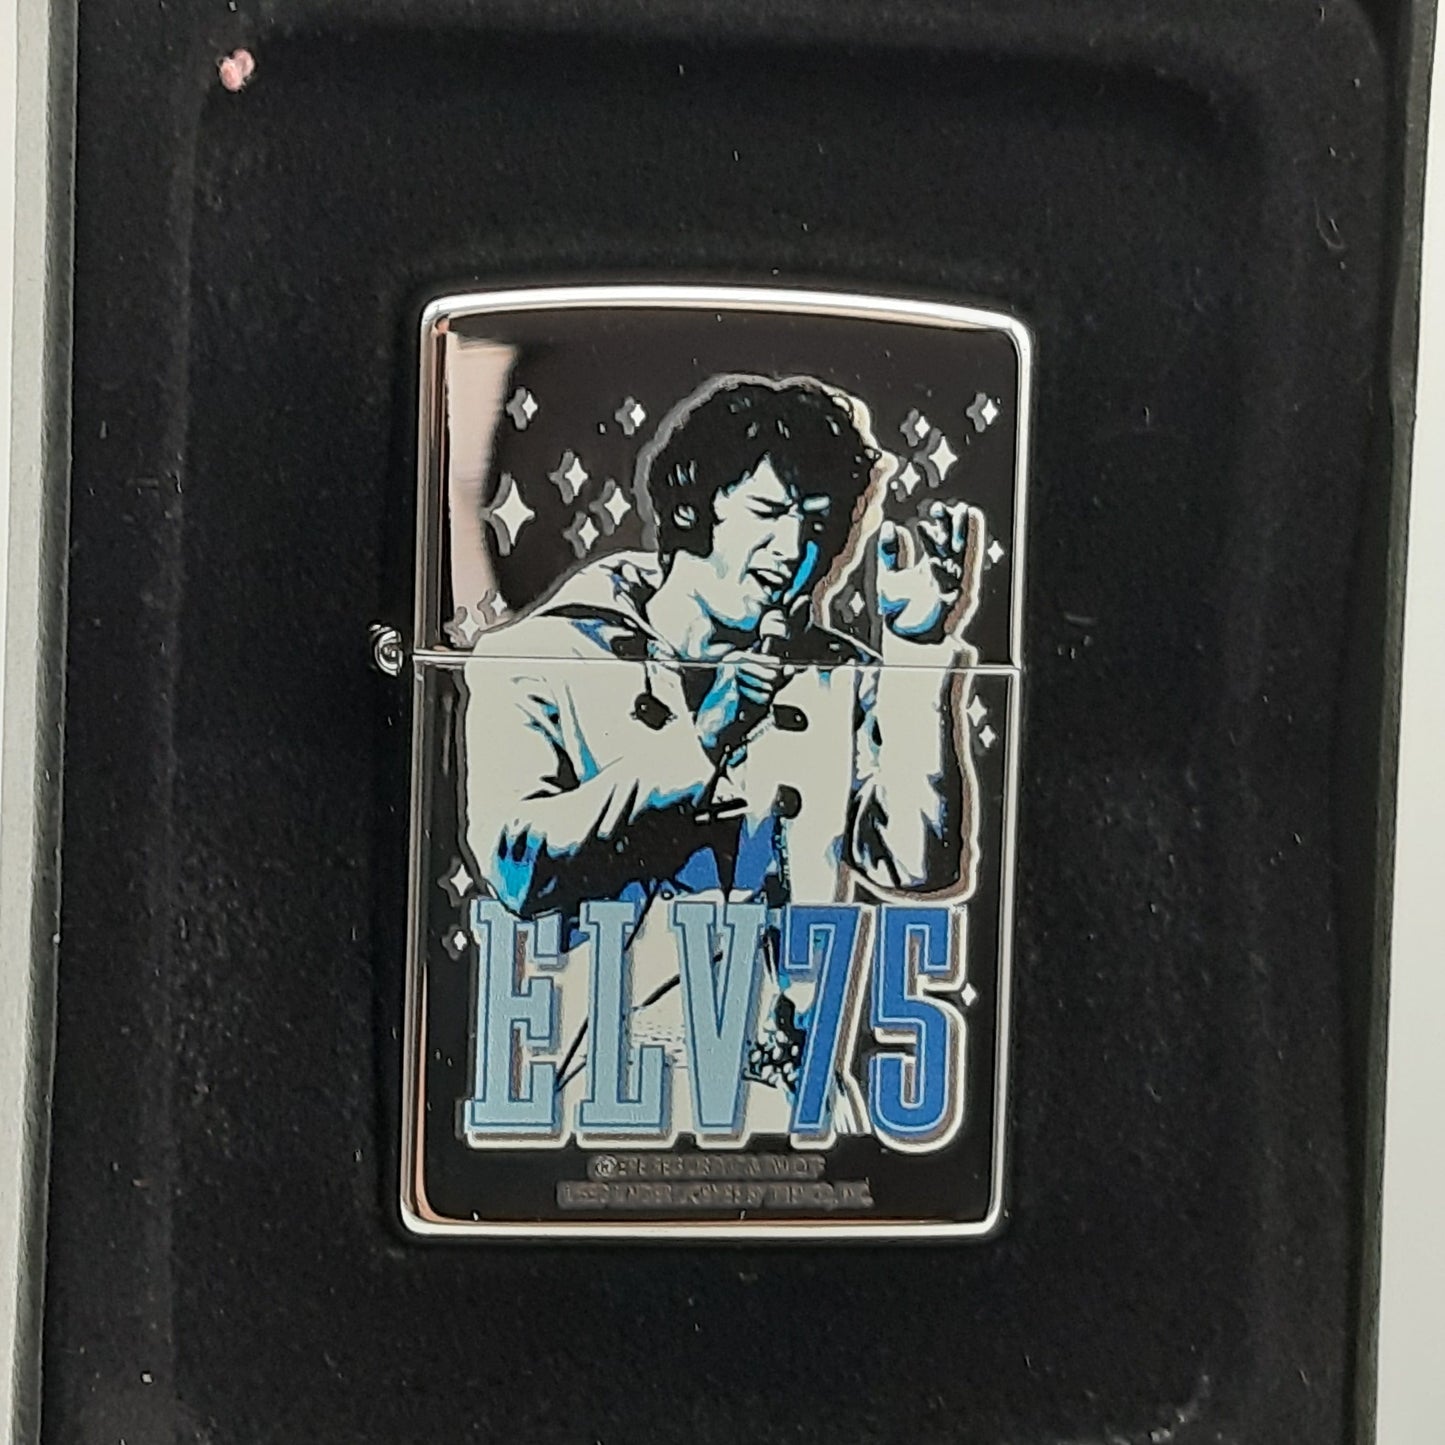 Zippo Zippo Benzinfeuerzeug Elvis 75th Anniversary Limited Edition